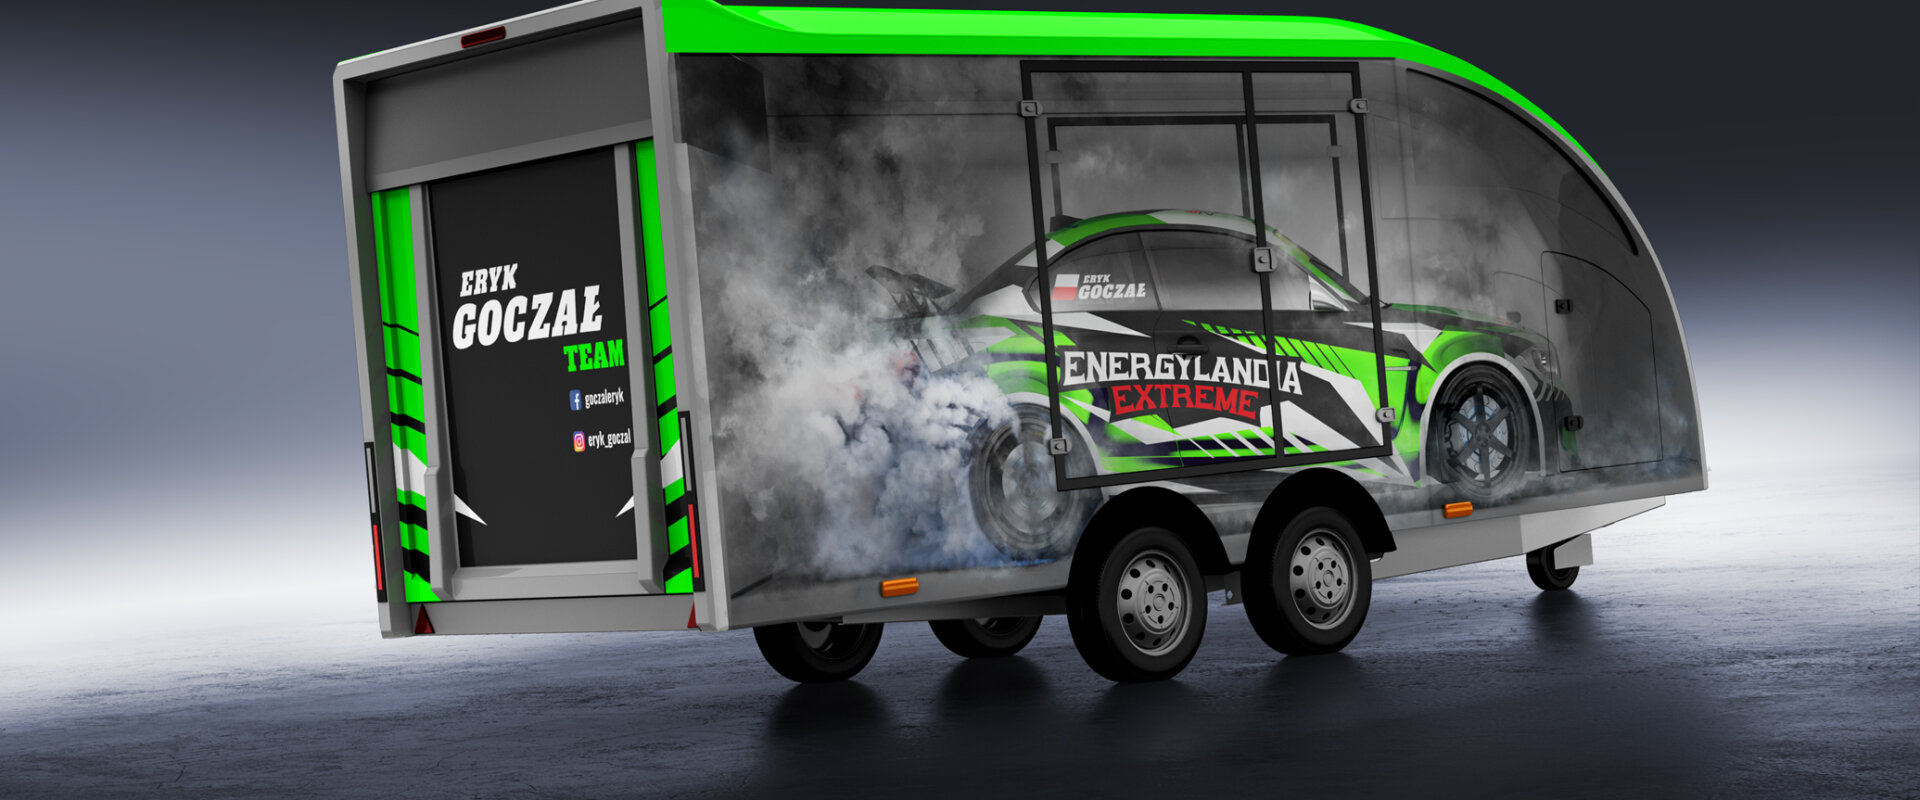 Energylandia Rally Team #3